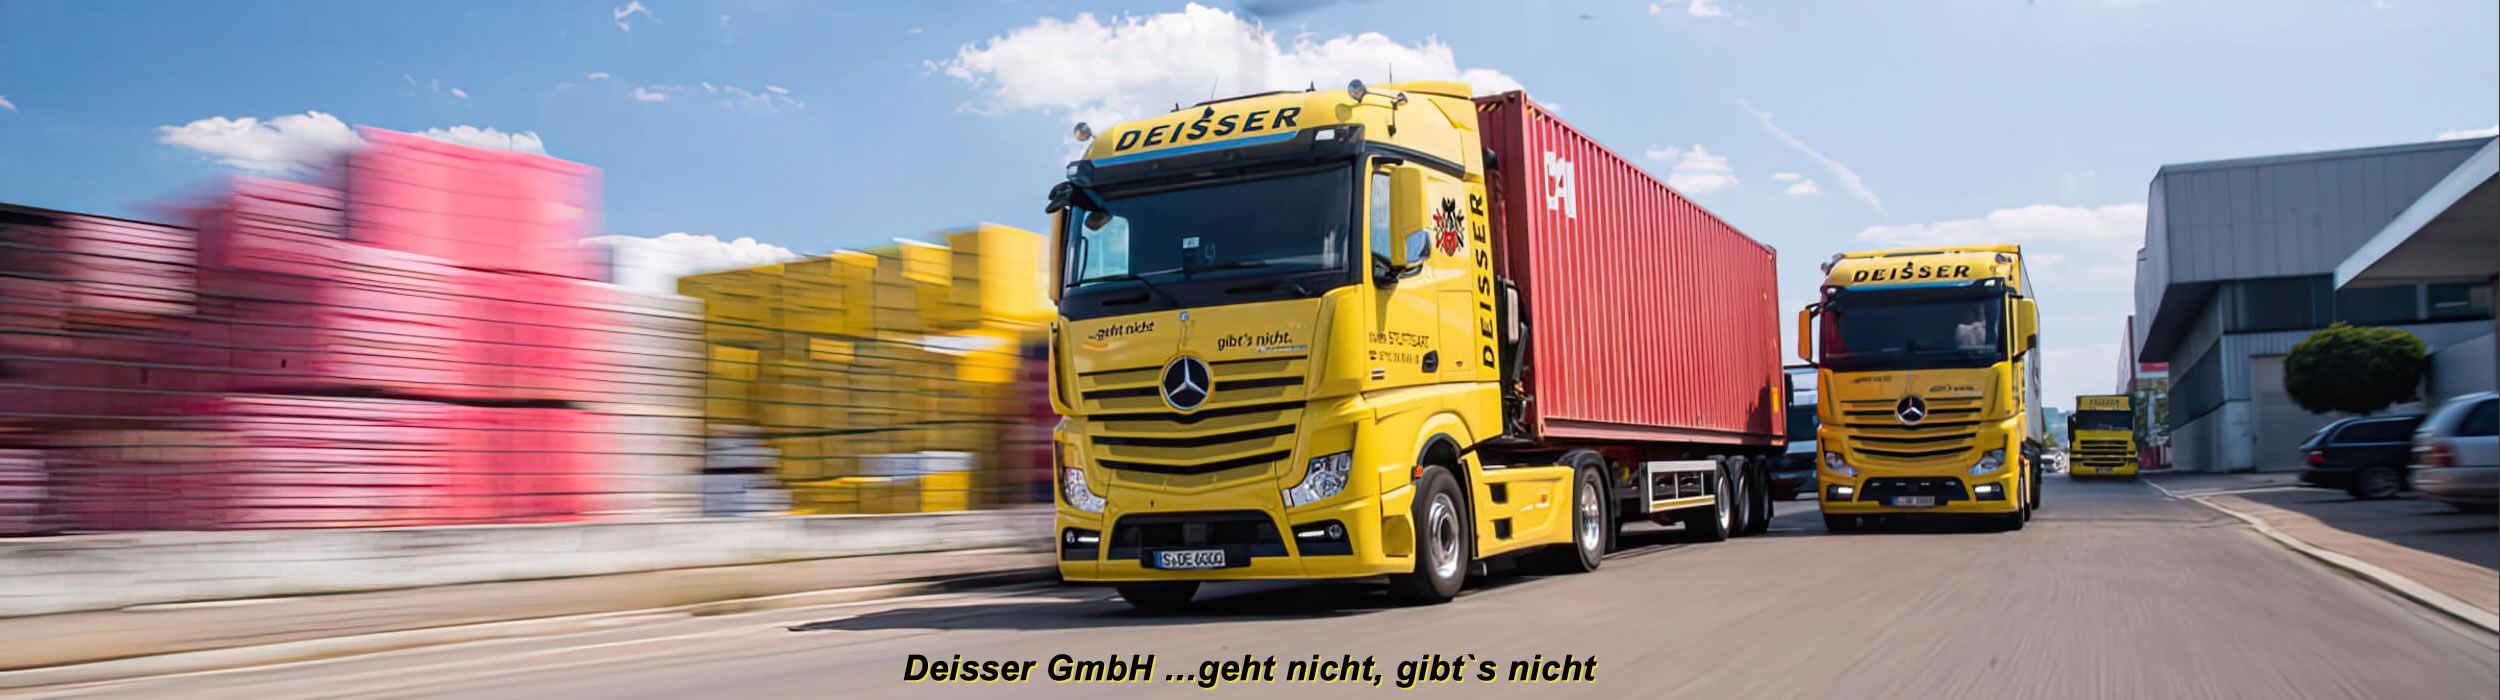 Deisser GmbH / Transportlogistik & Seecontainer